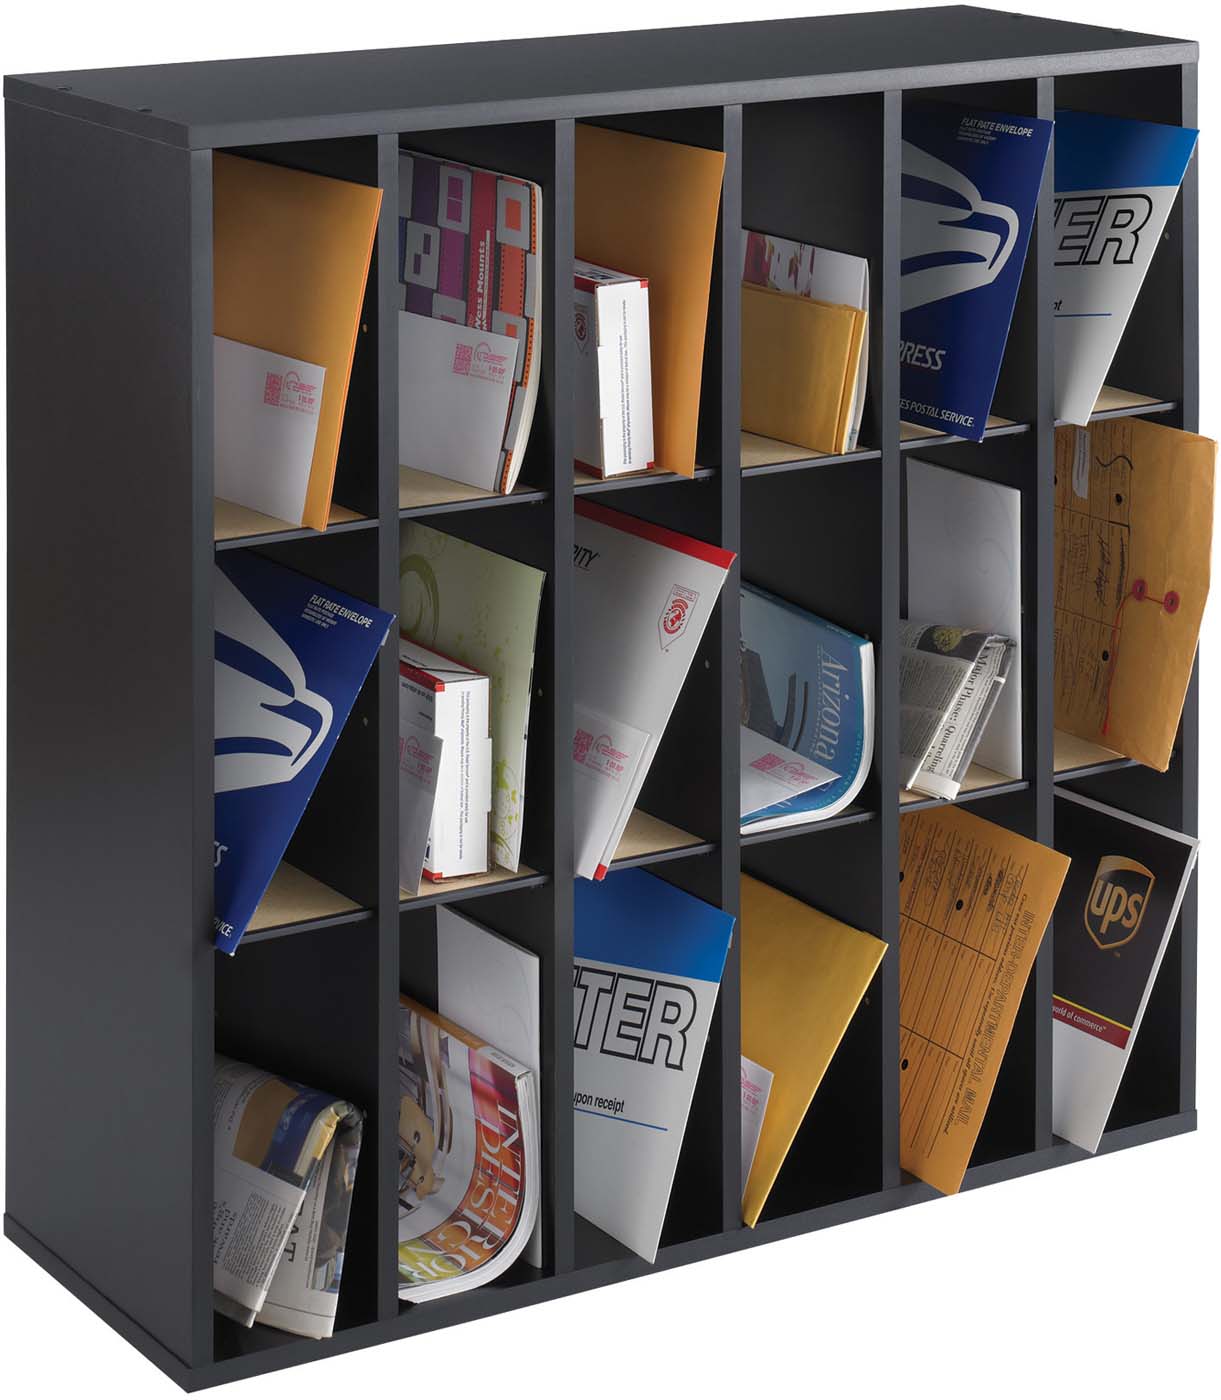 Mailroom Organizers & Storage